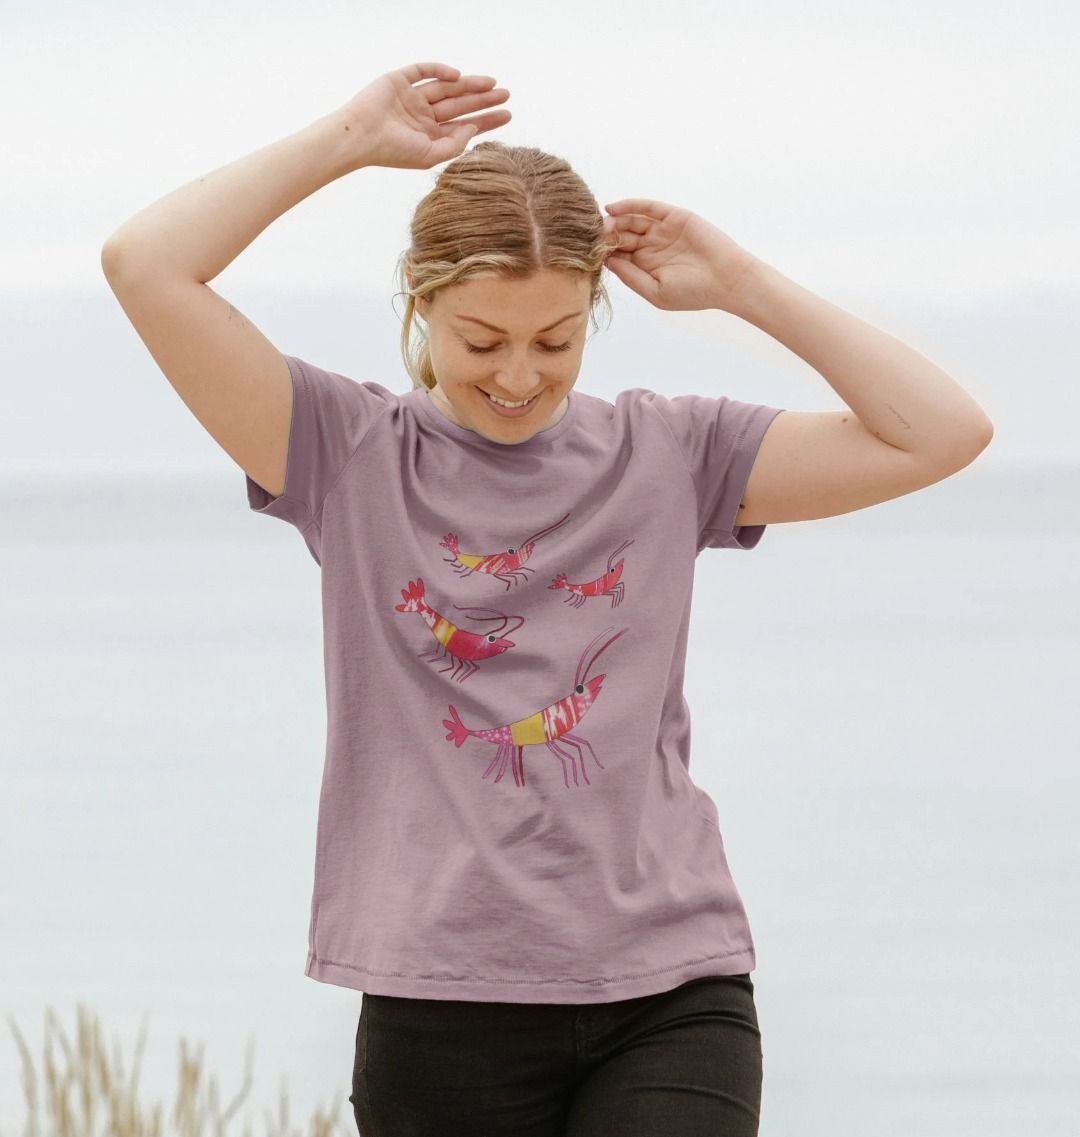 prawn party organic women's tee - Printed T-shirt - Sarah Millin